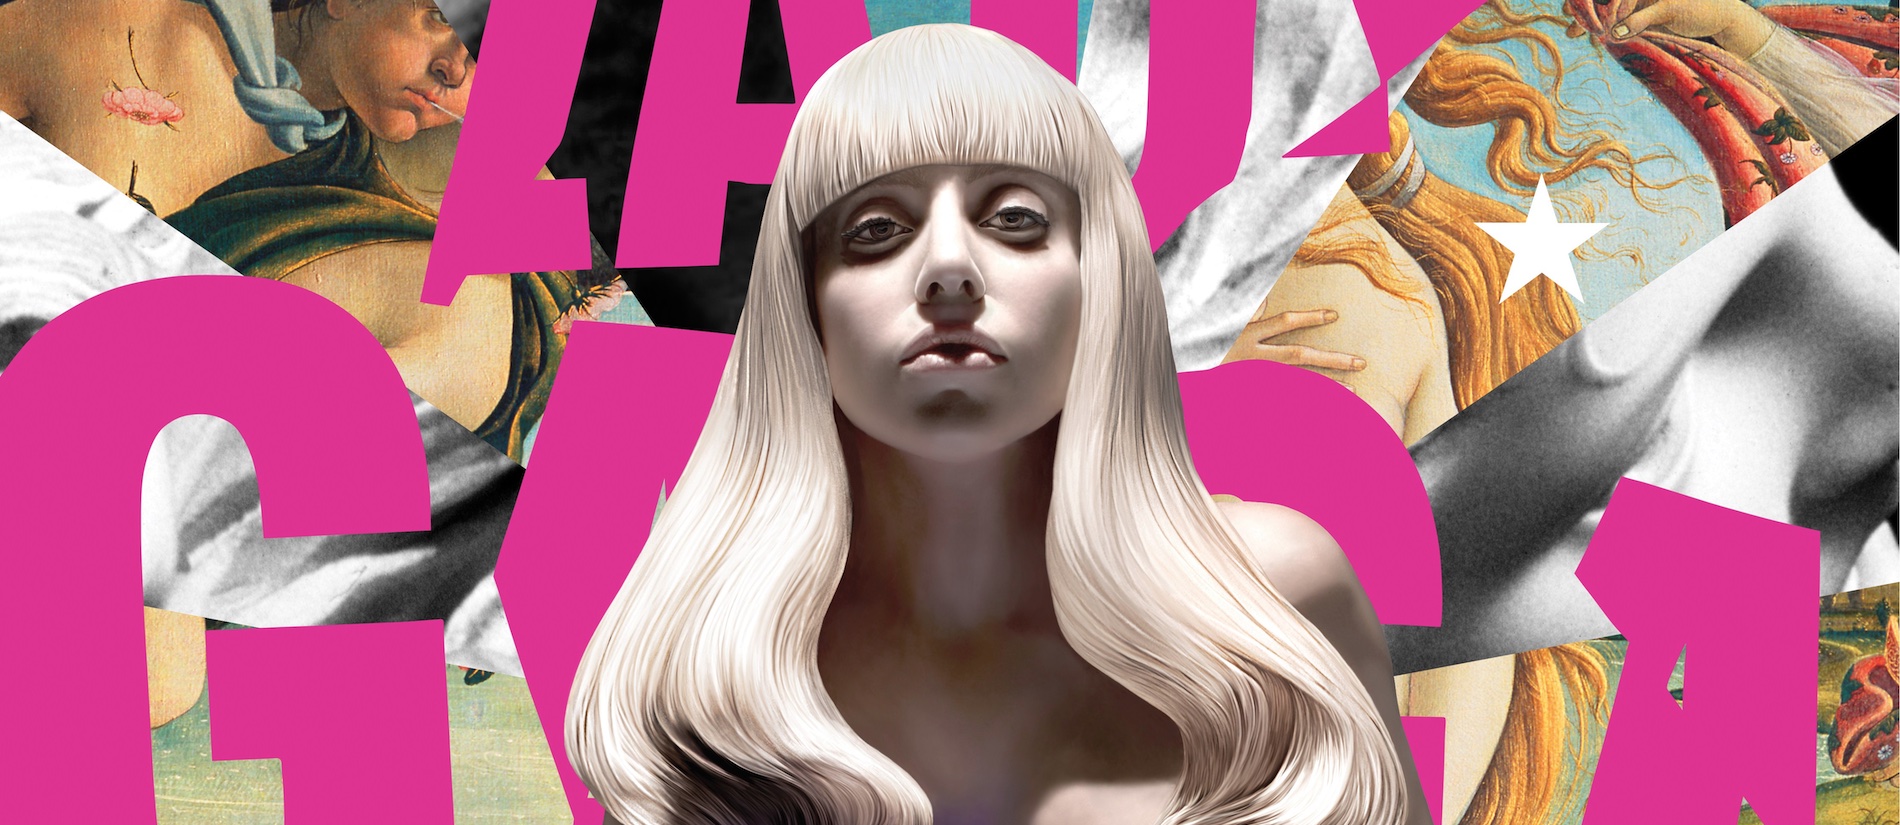 Леди гага game. Леди Гага обложки альбомов. Леди Гага Эра артпоп. Lady Gaga 2013 ARTPOP. Lady Gaga ARTPOP album Cover.